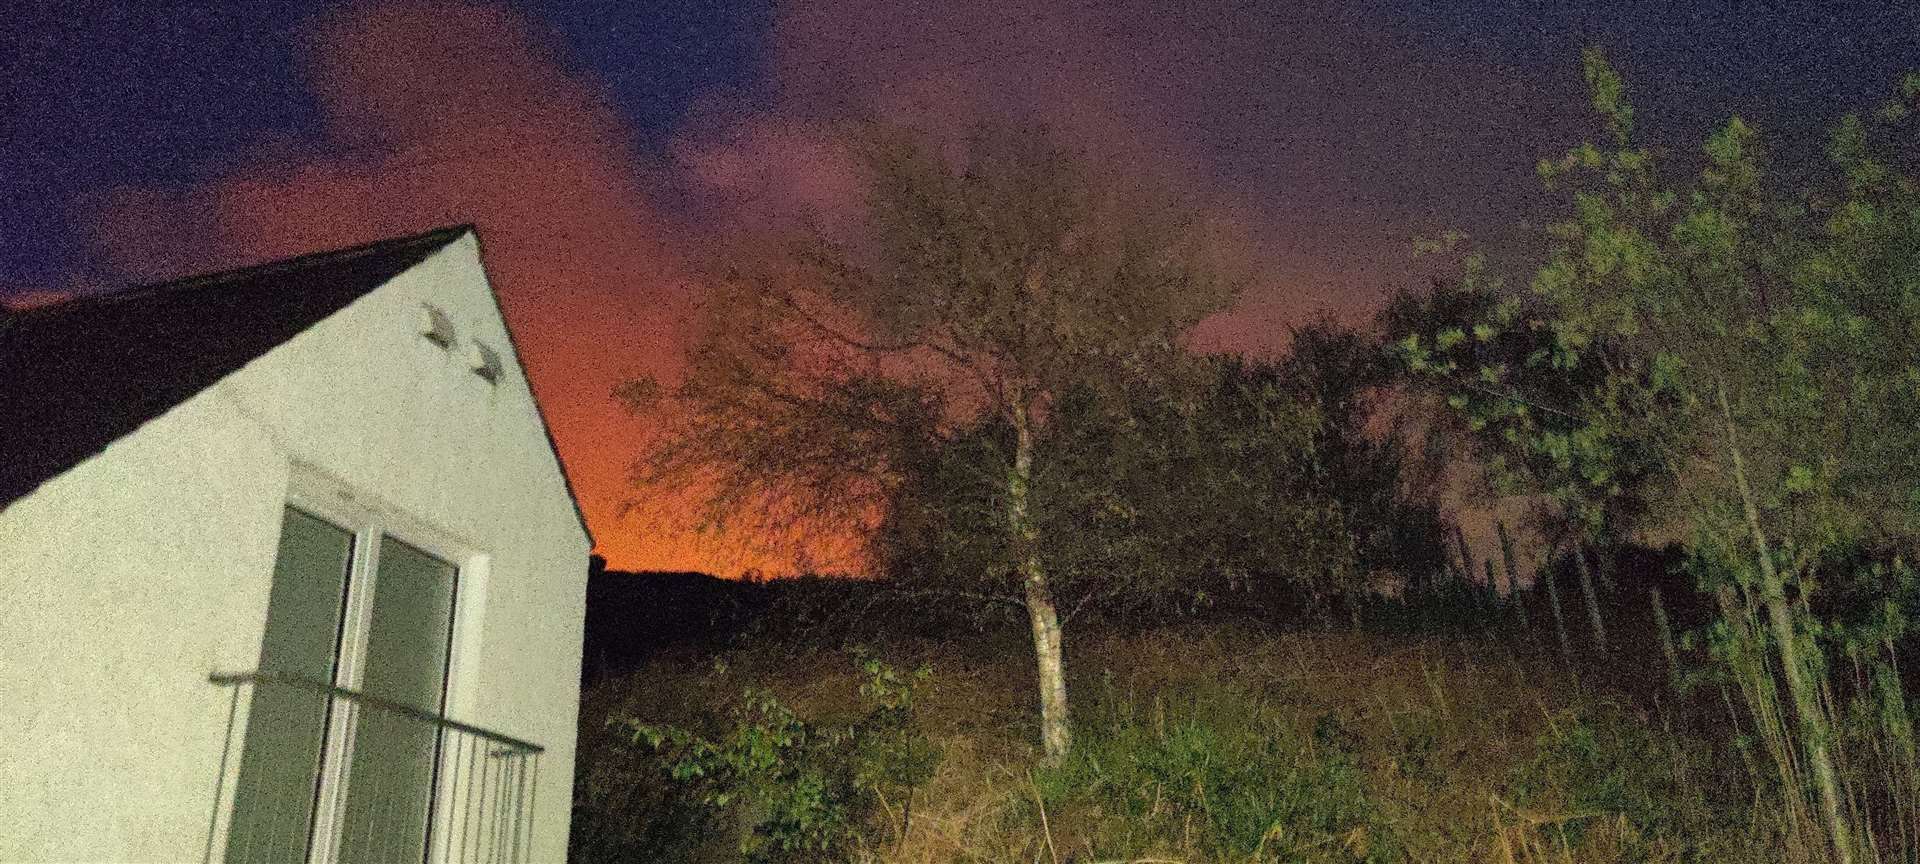 Flames light the night sky near Kyle.